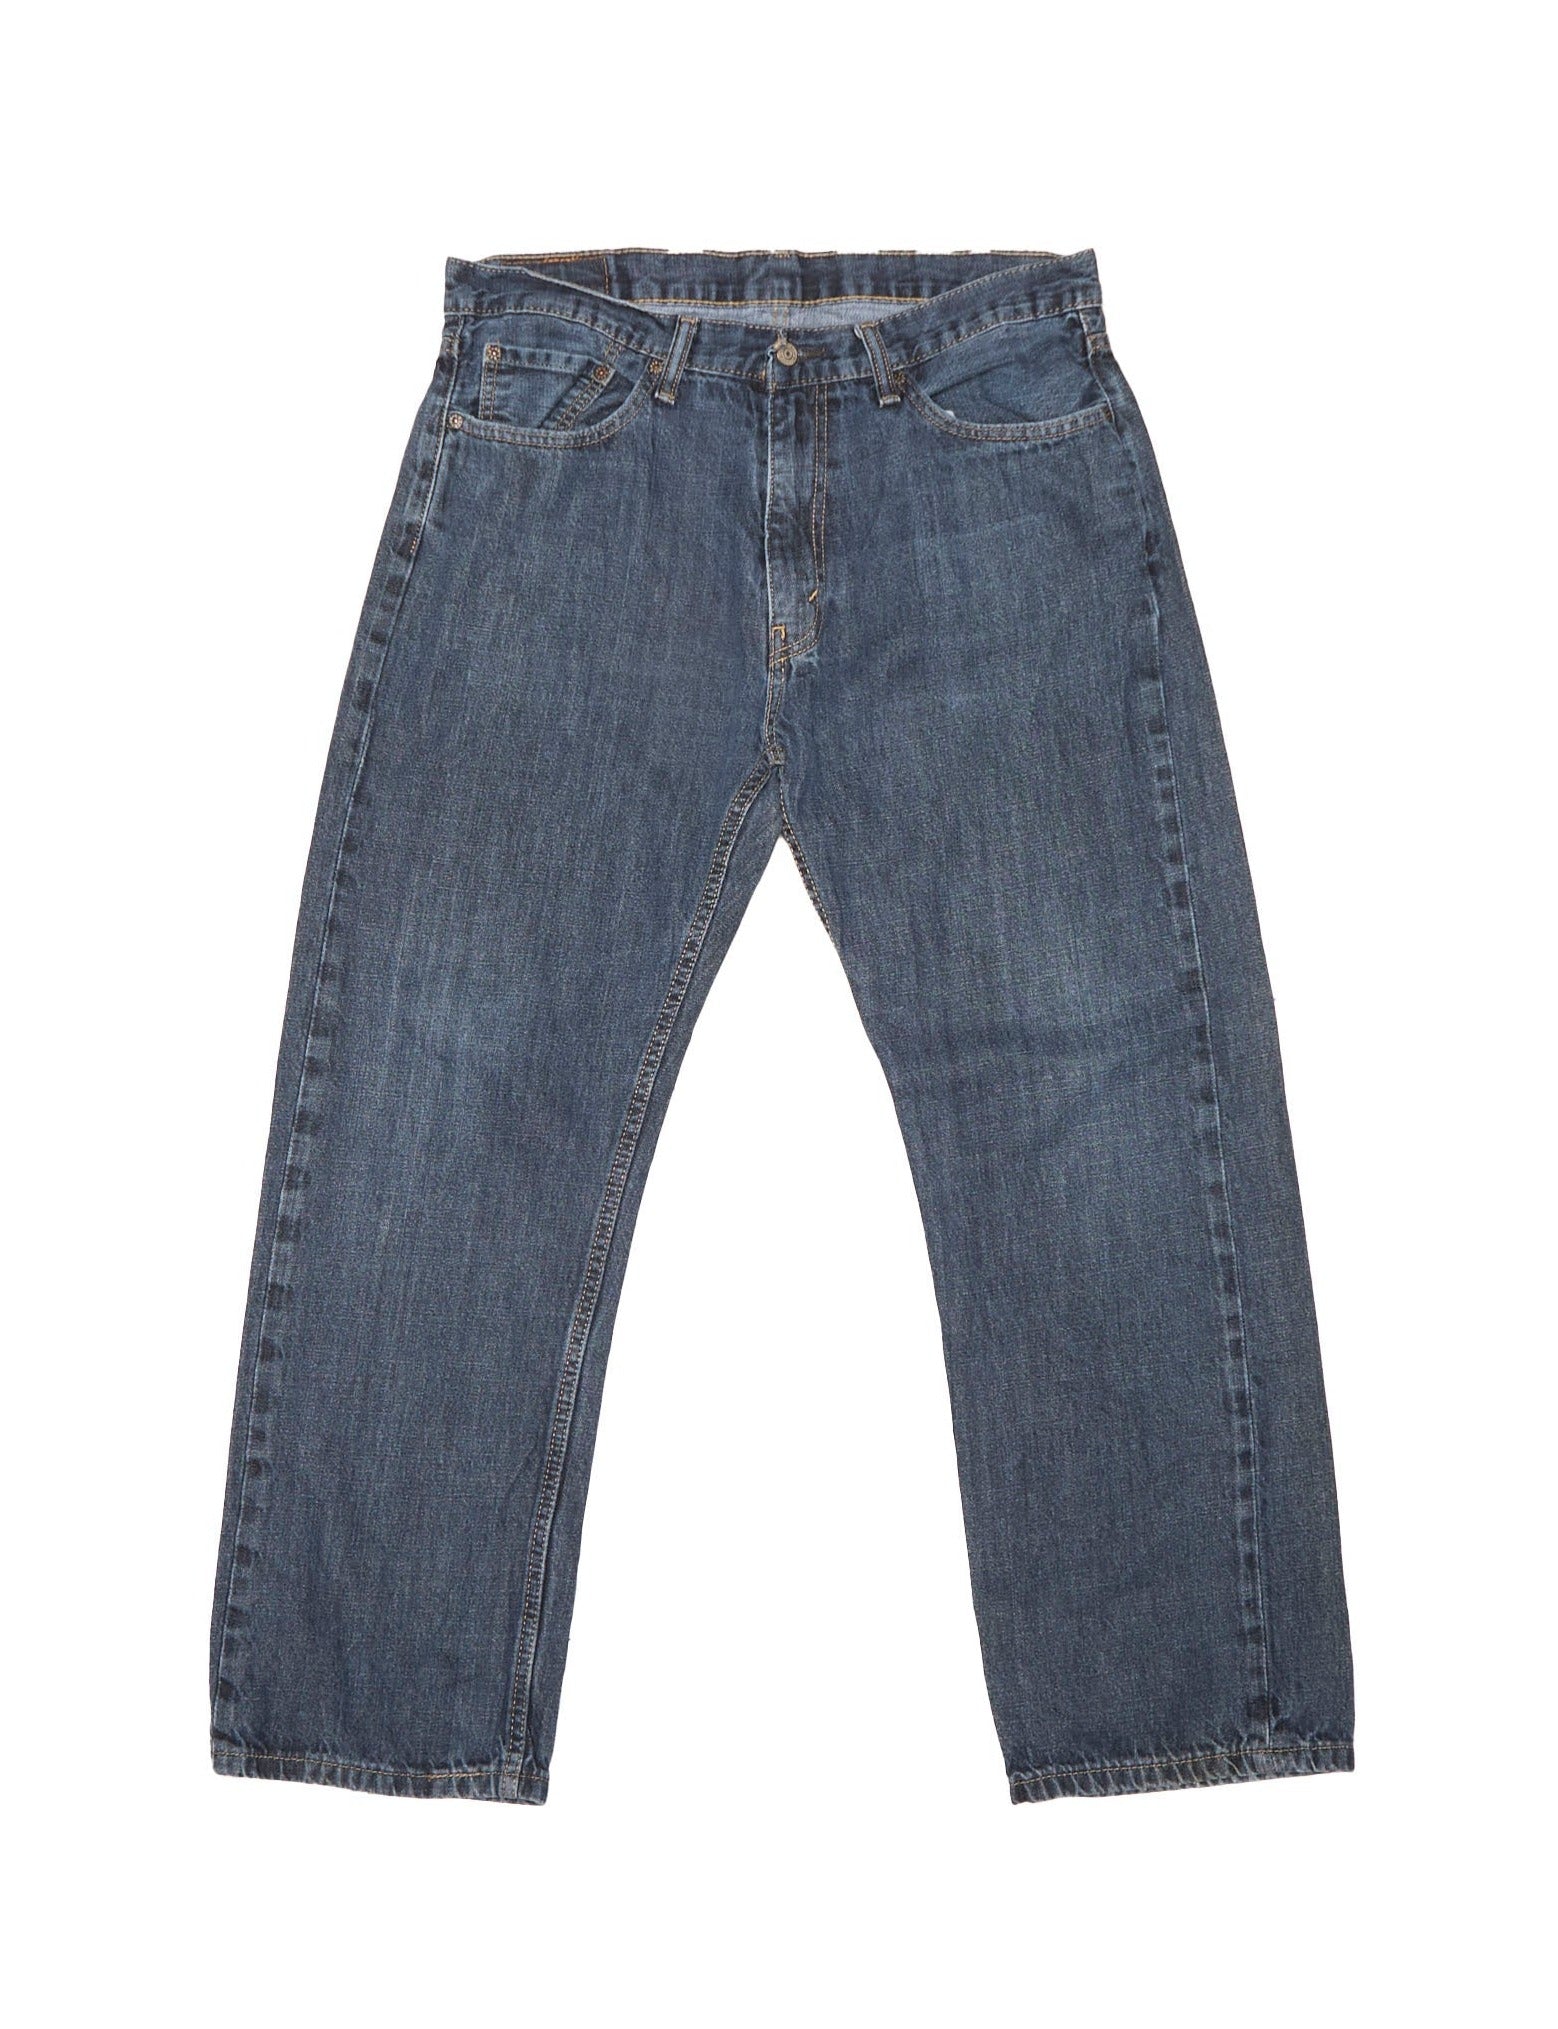 Zip Levis Straight Cut Jeans - W36" L30"